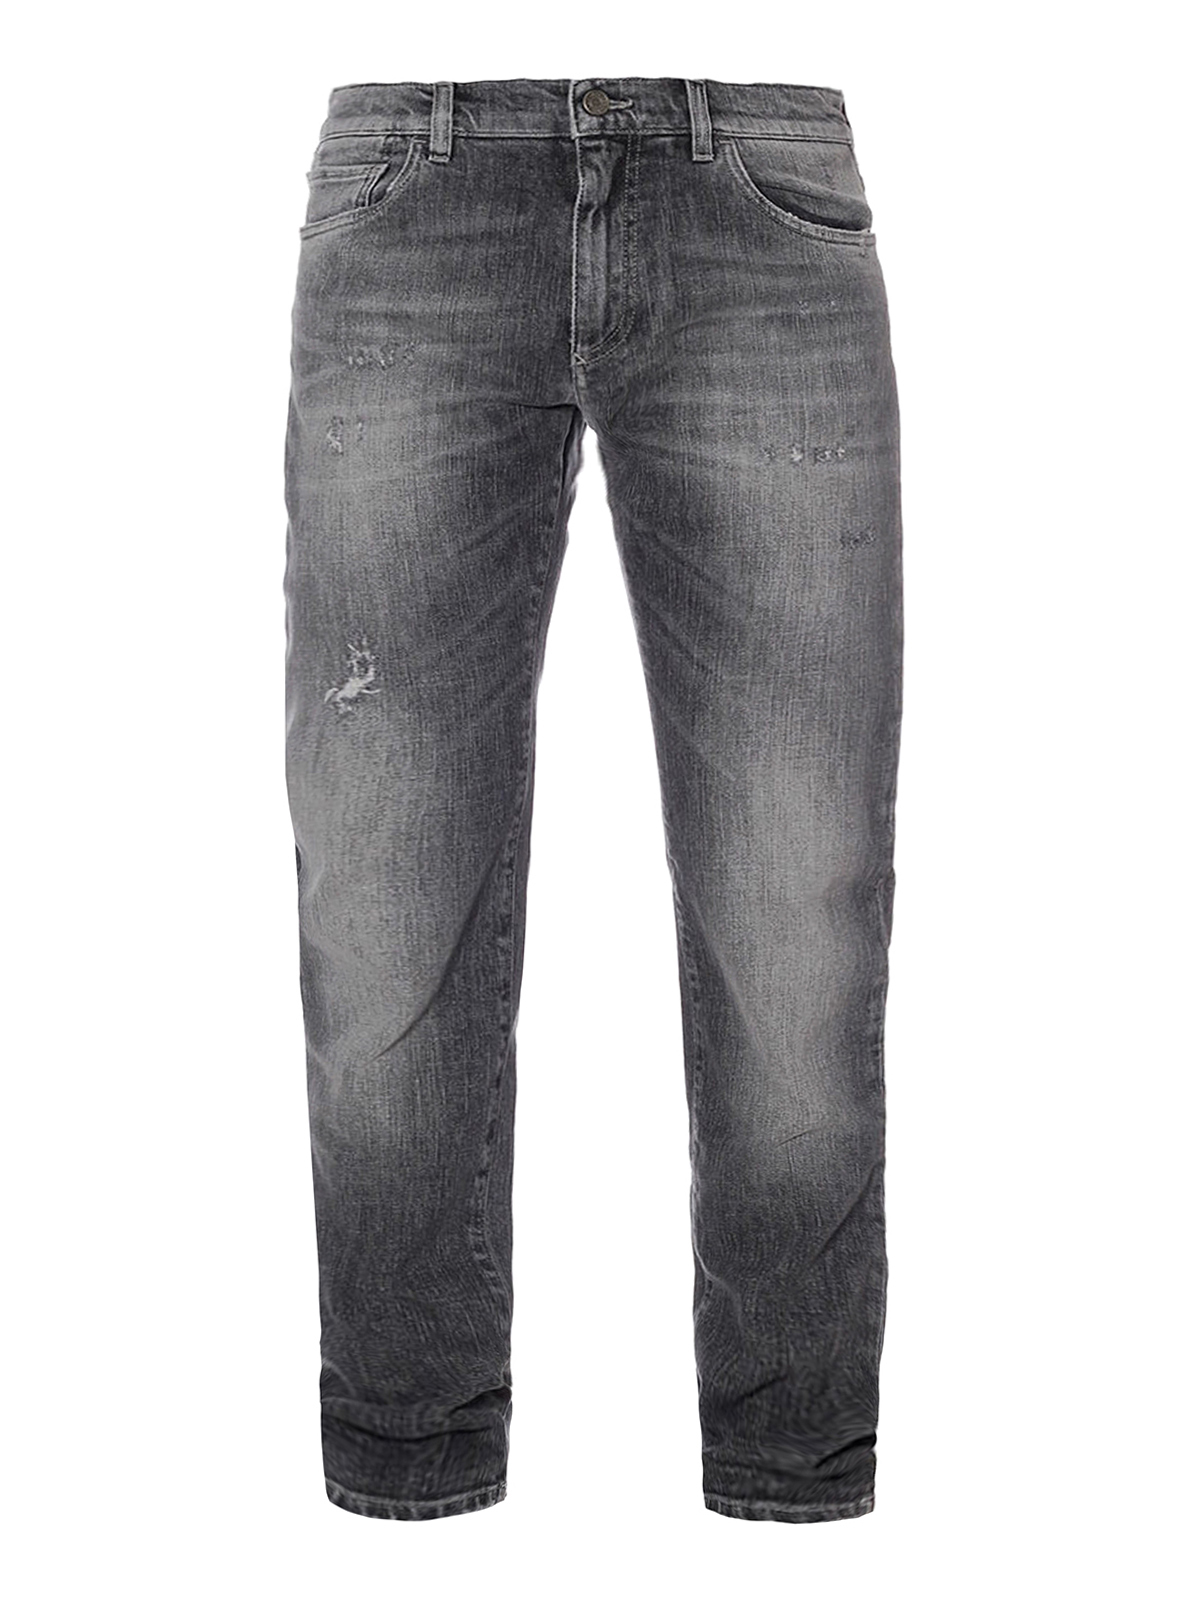 Straight leg jeans Dolce & Gabbana - Faded grey denim jeans ...